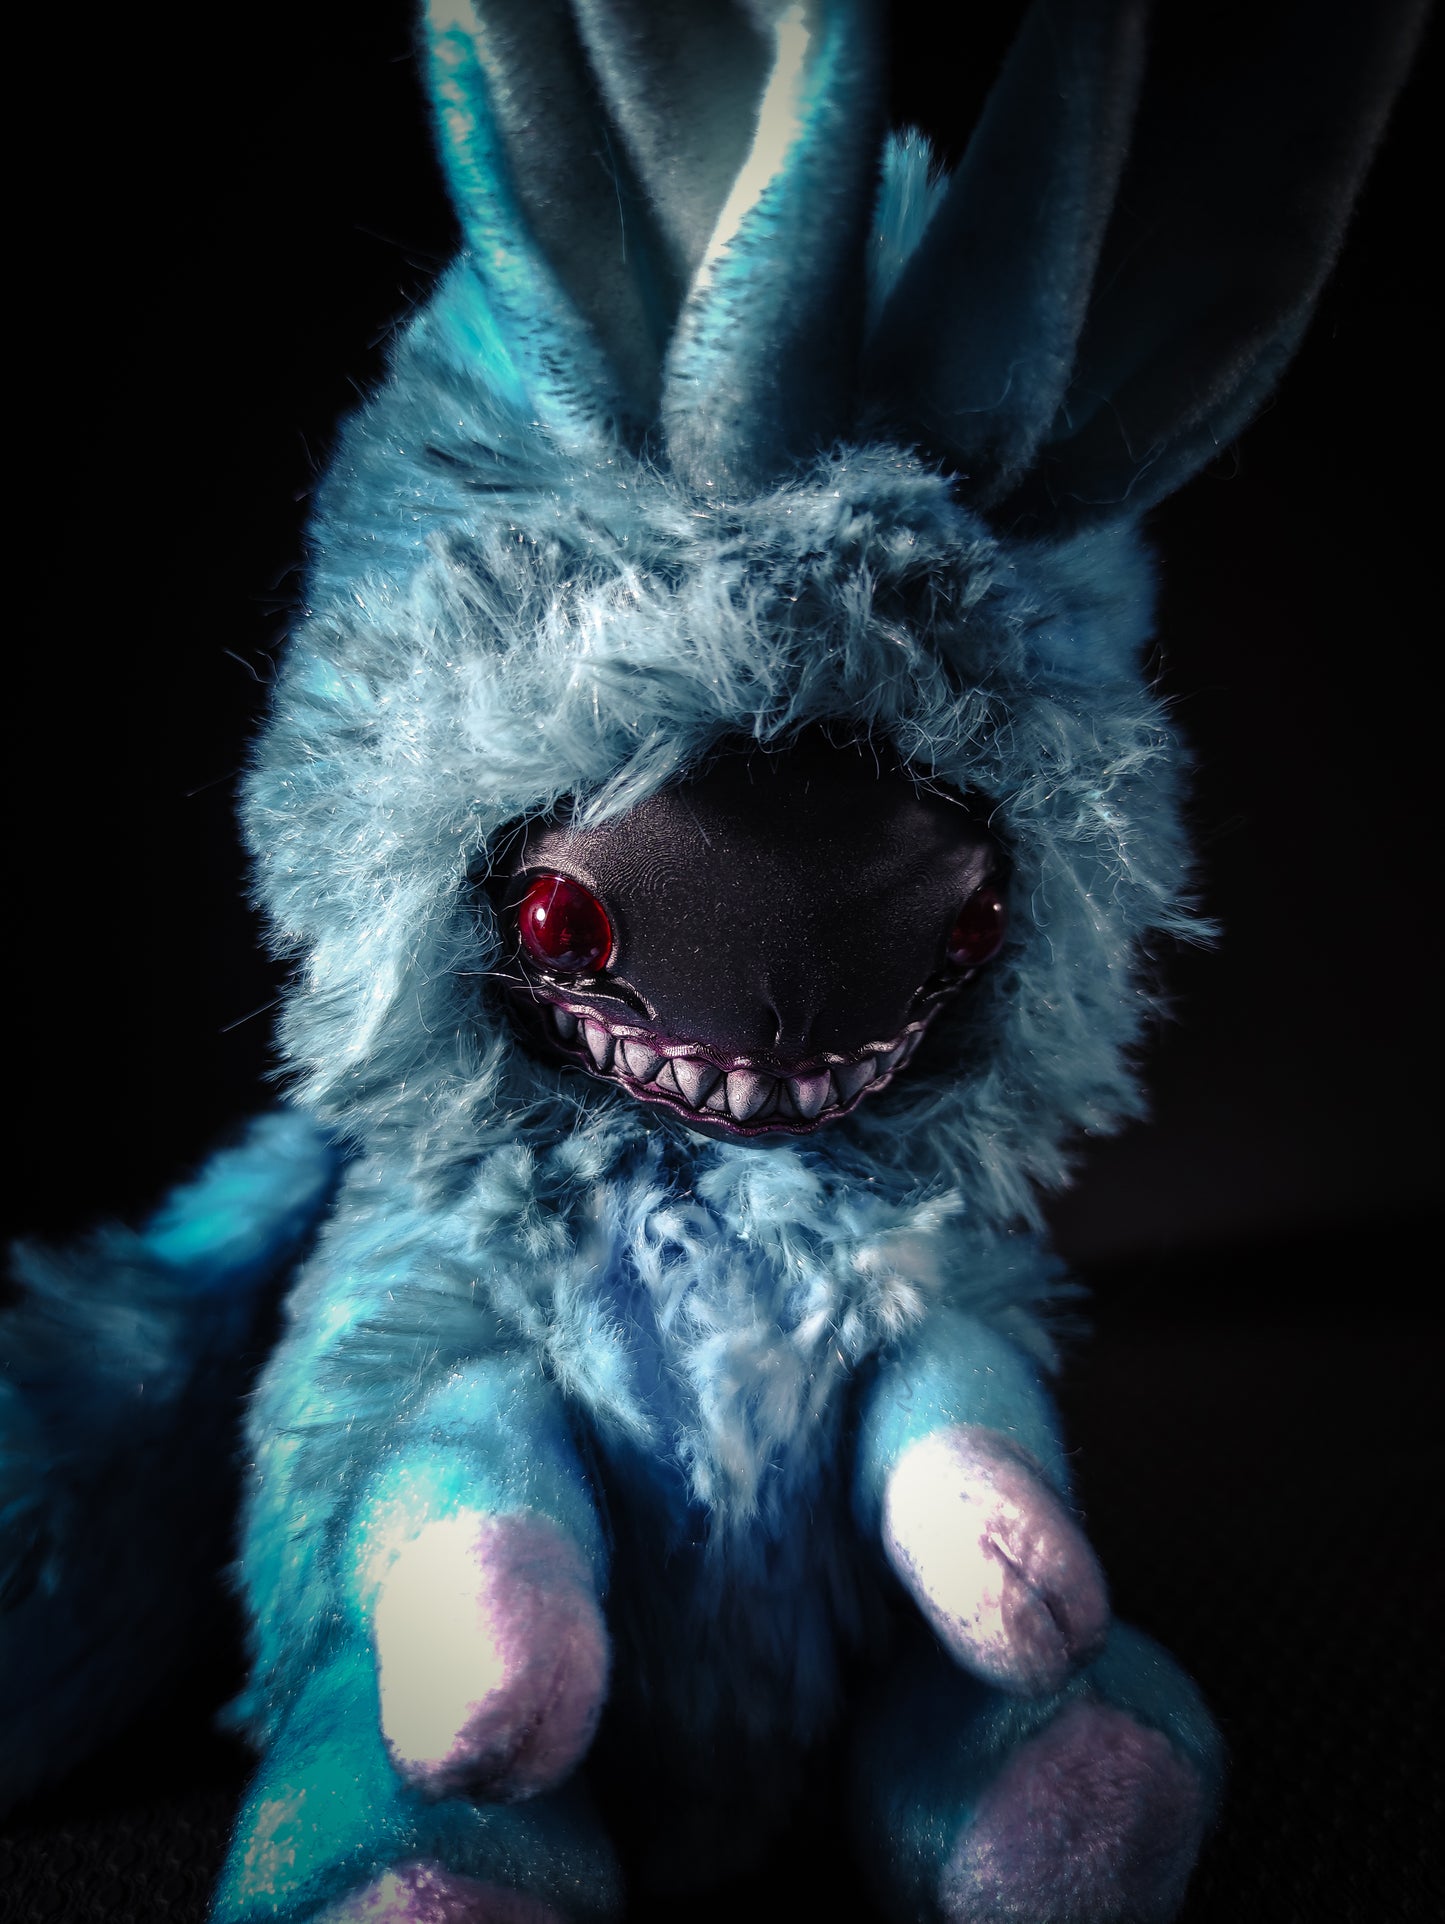 FRIEND Dark Abyss Flavour - Cryptid Art Doll Plush Toy